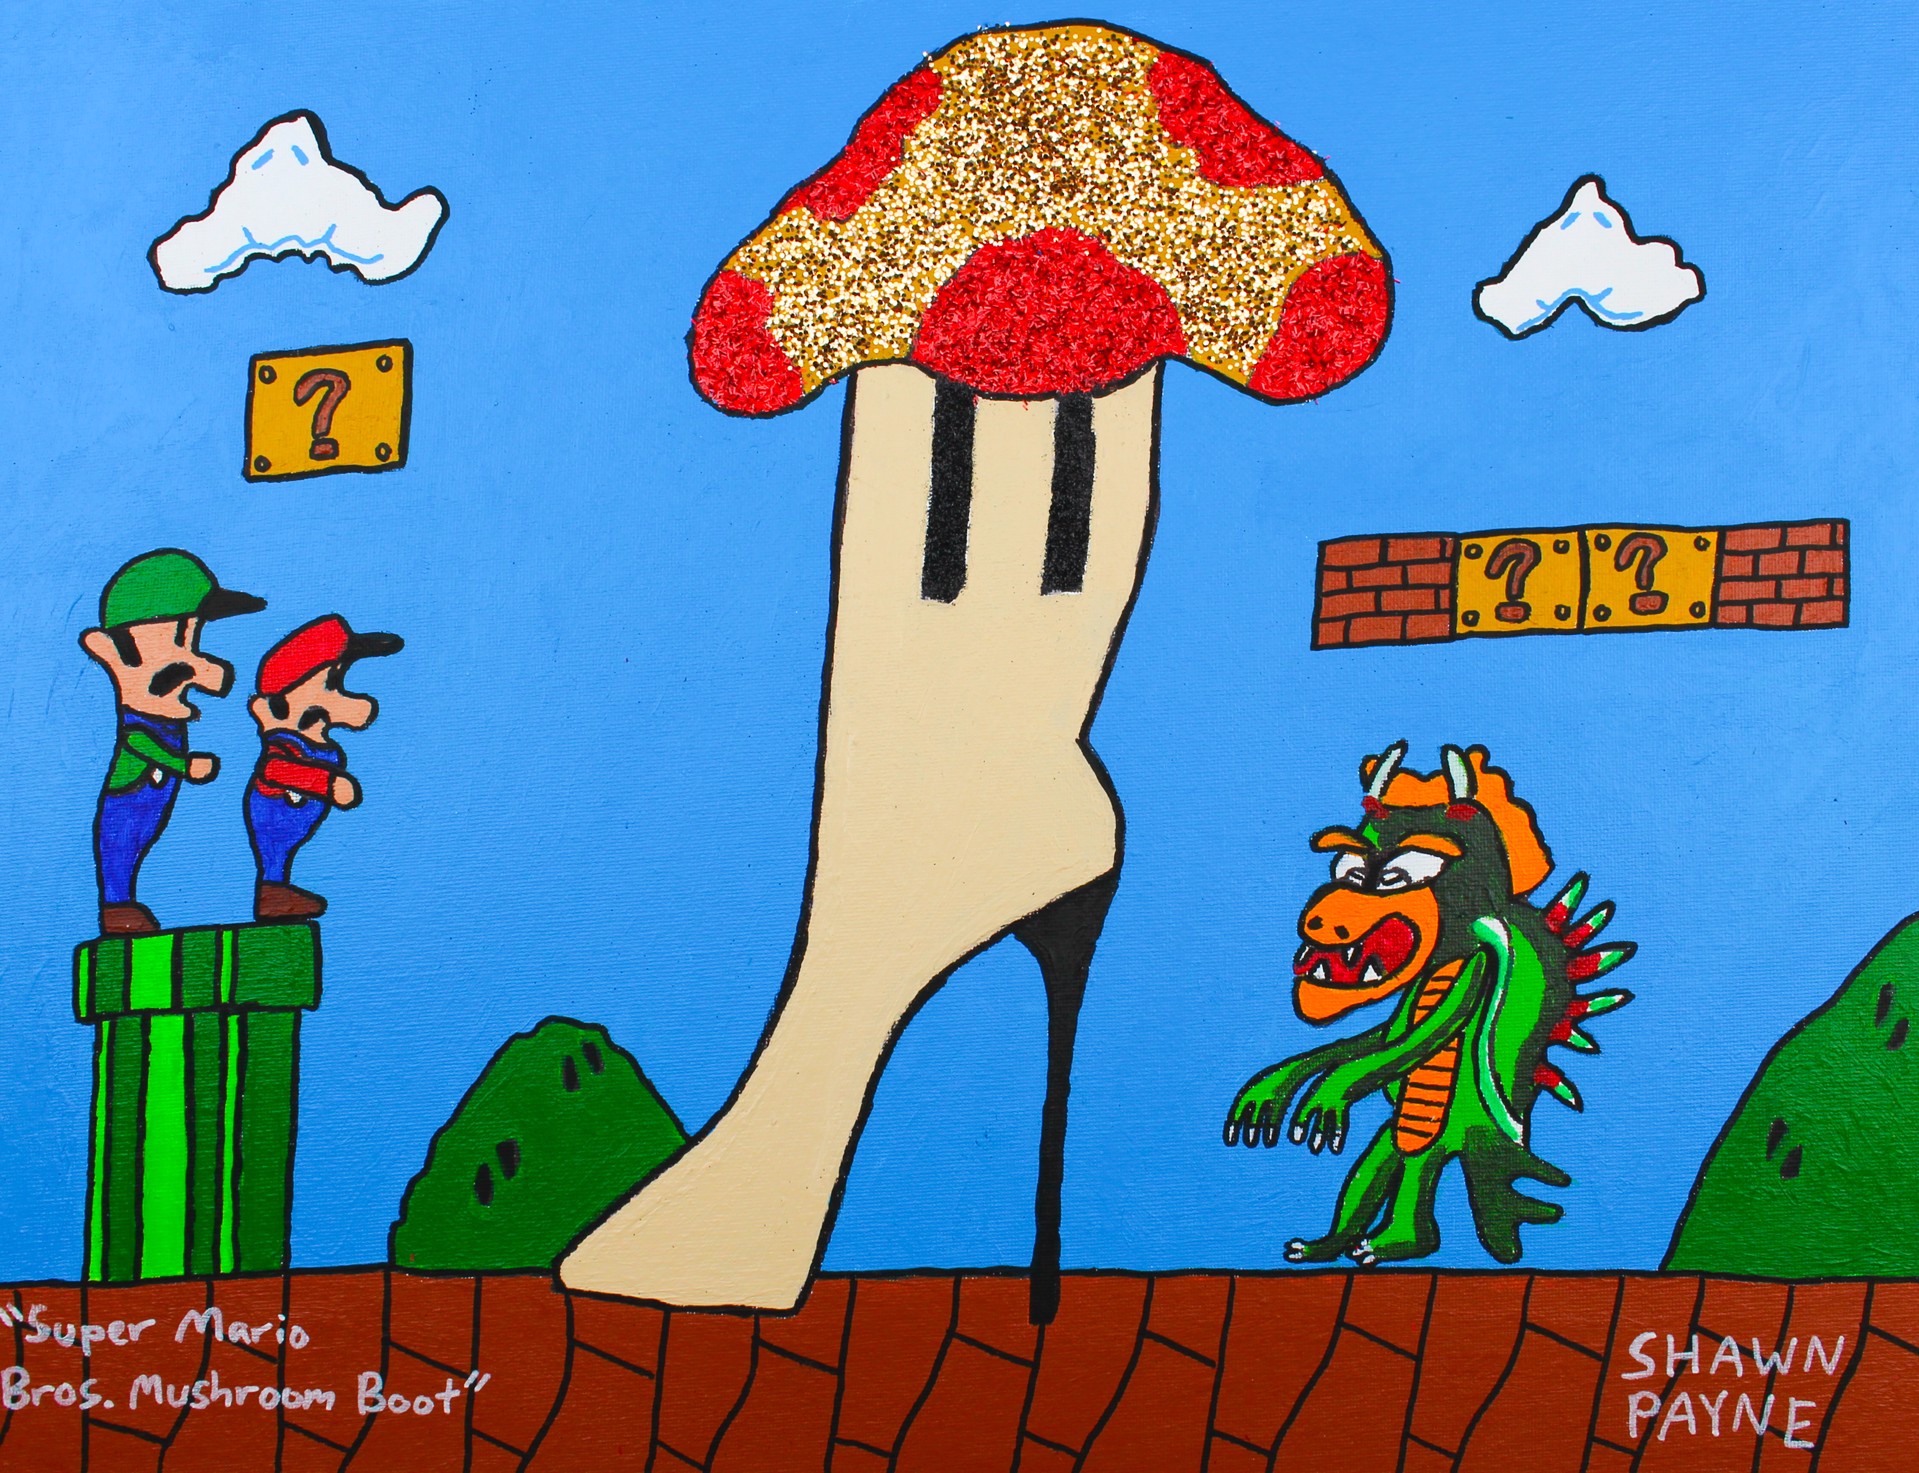 Super Mario Bros. Mushroom Boots by Shawn Payne